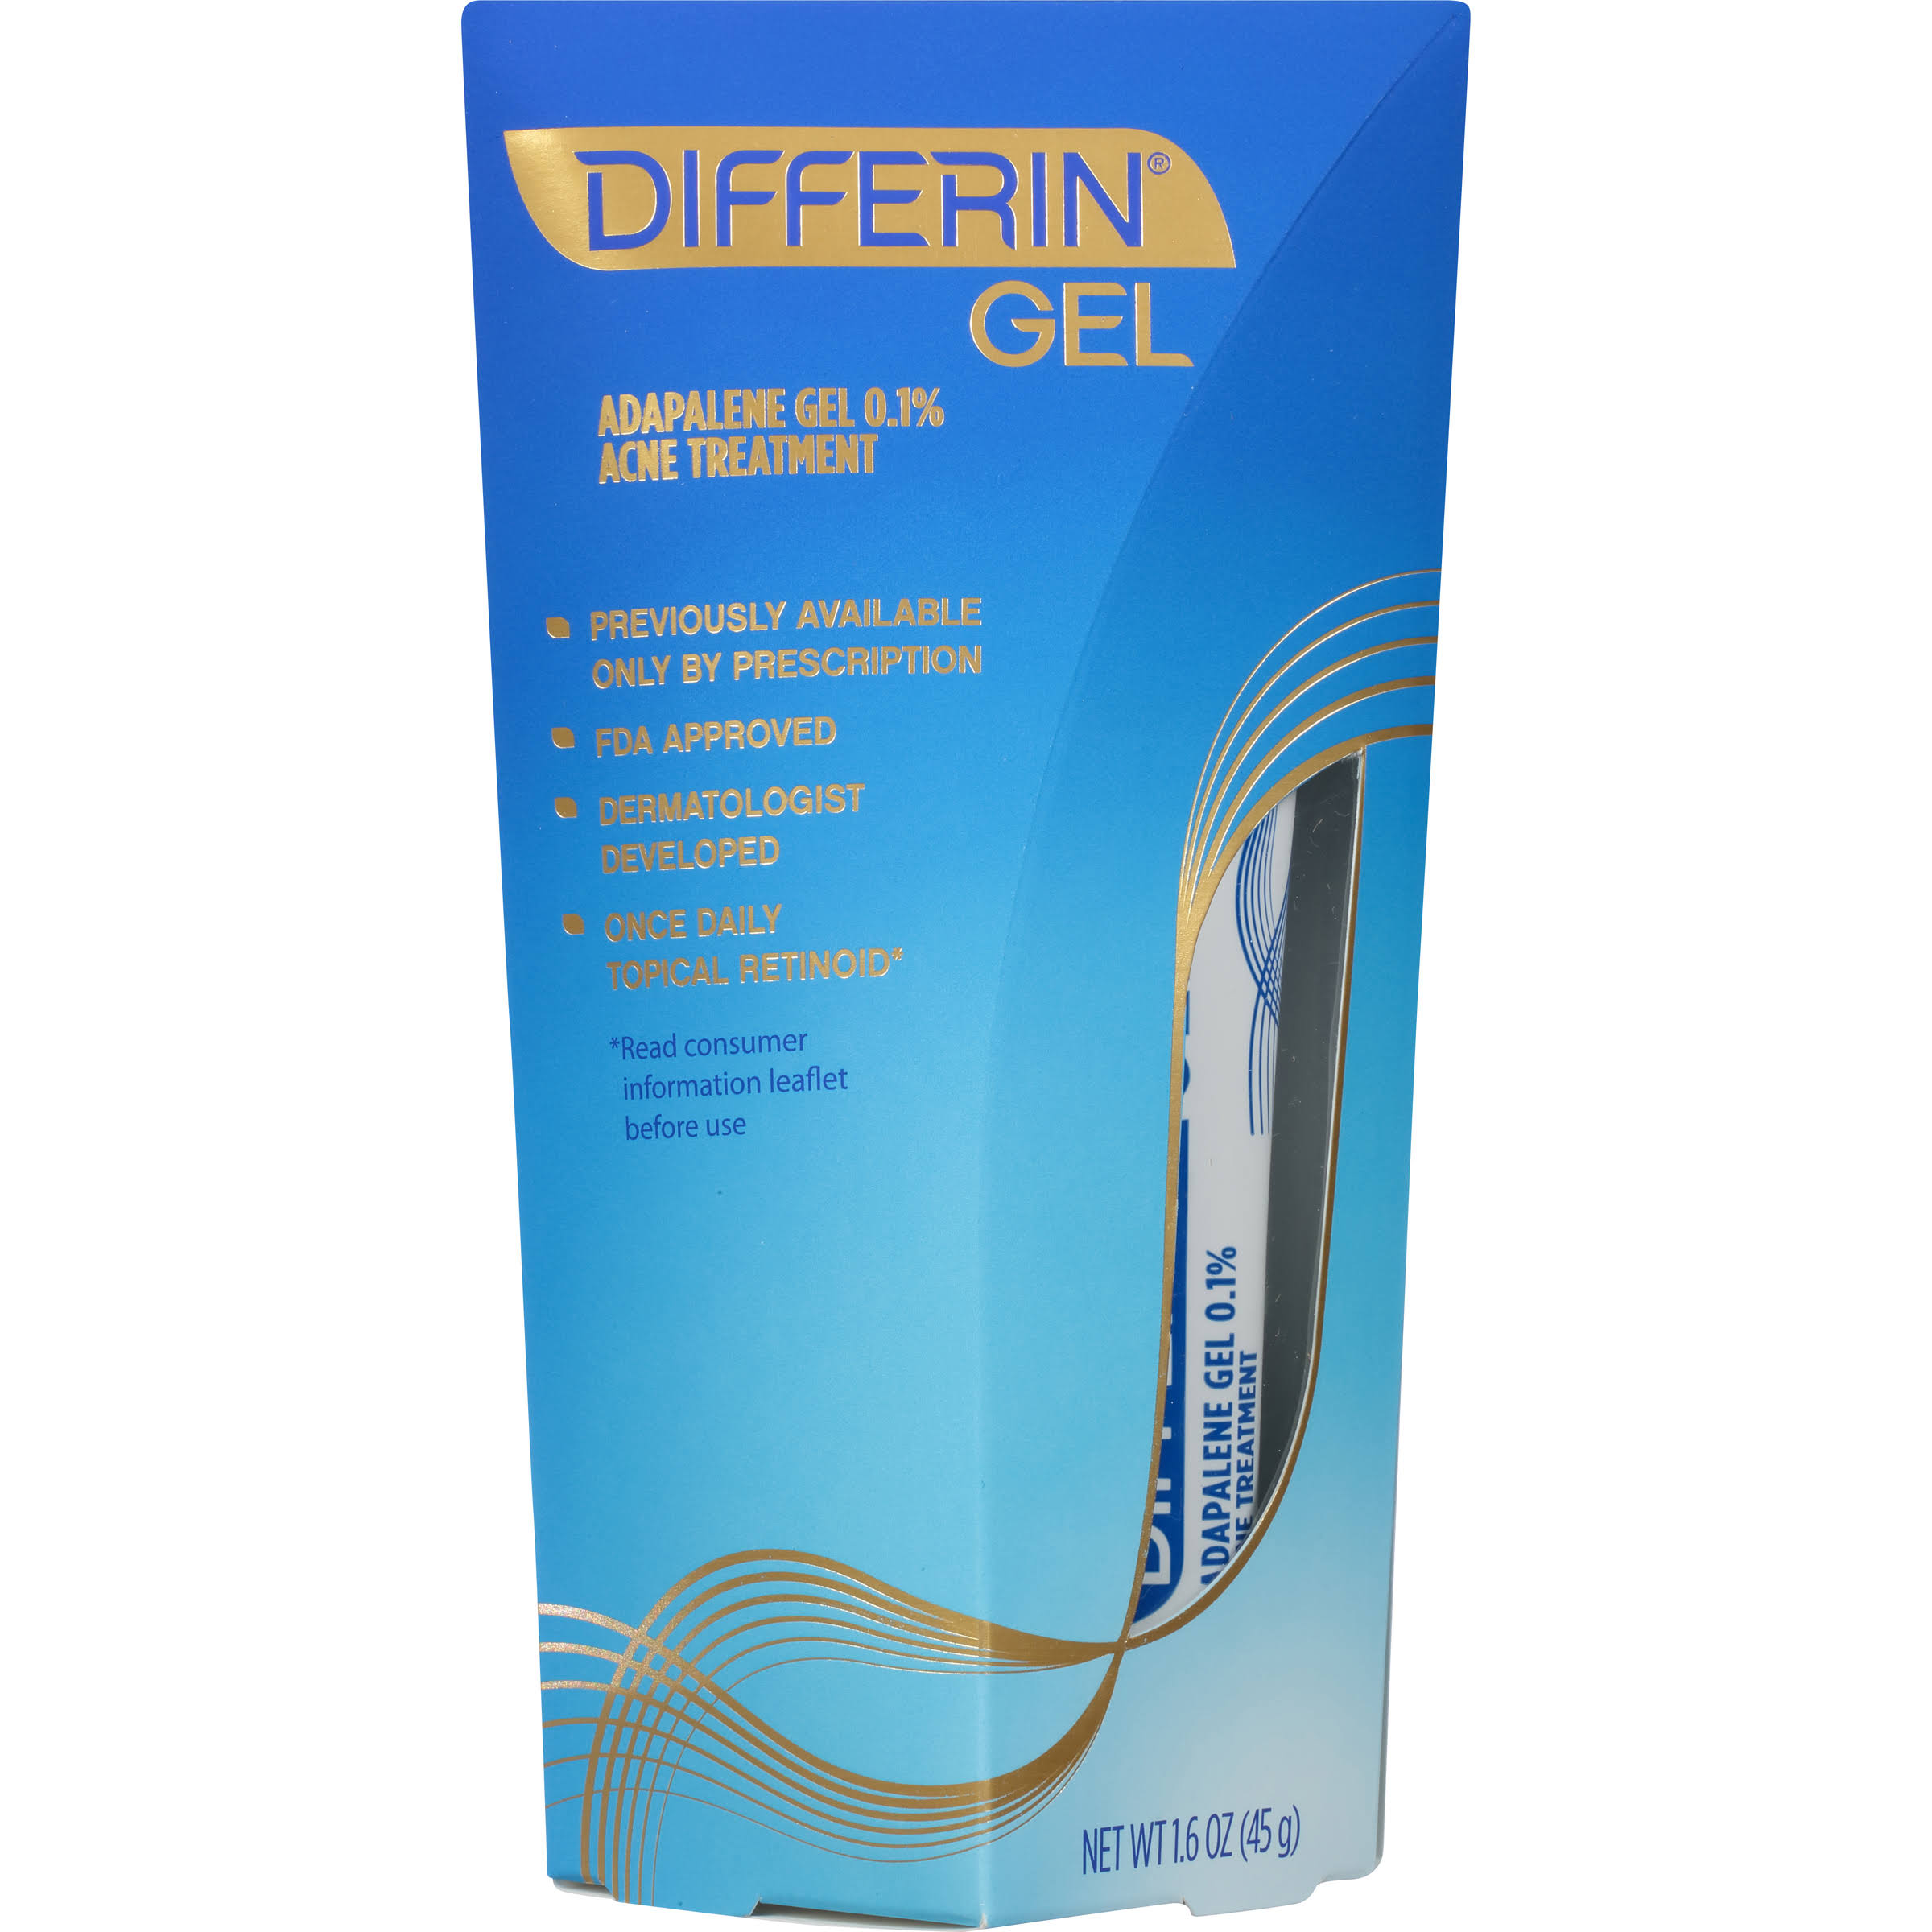 Differin Adapalene Gel 0.1% Acne Treatment - 45g